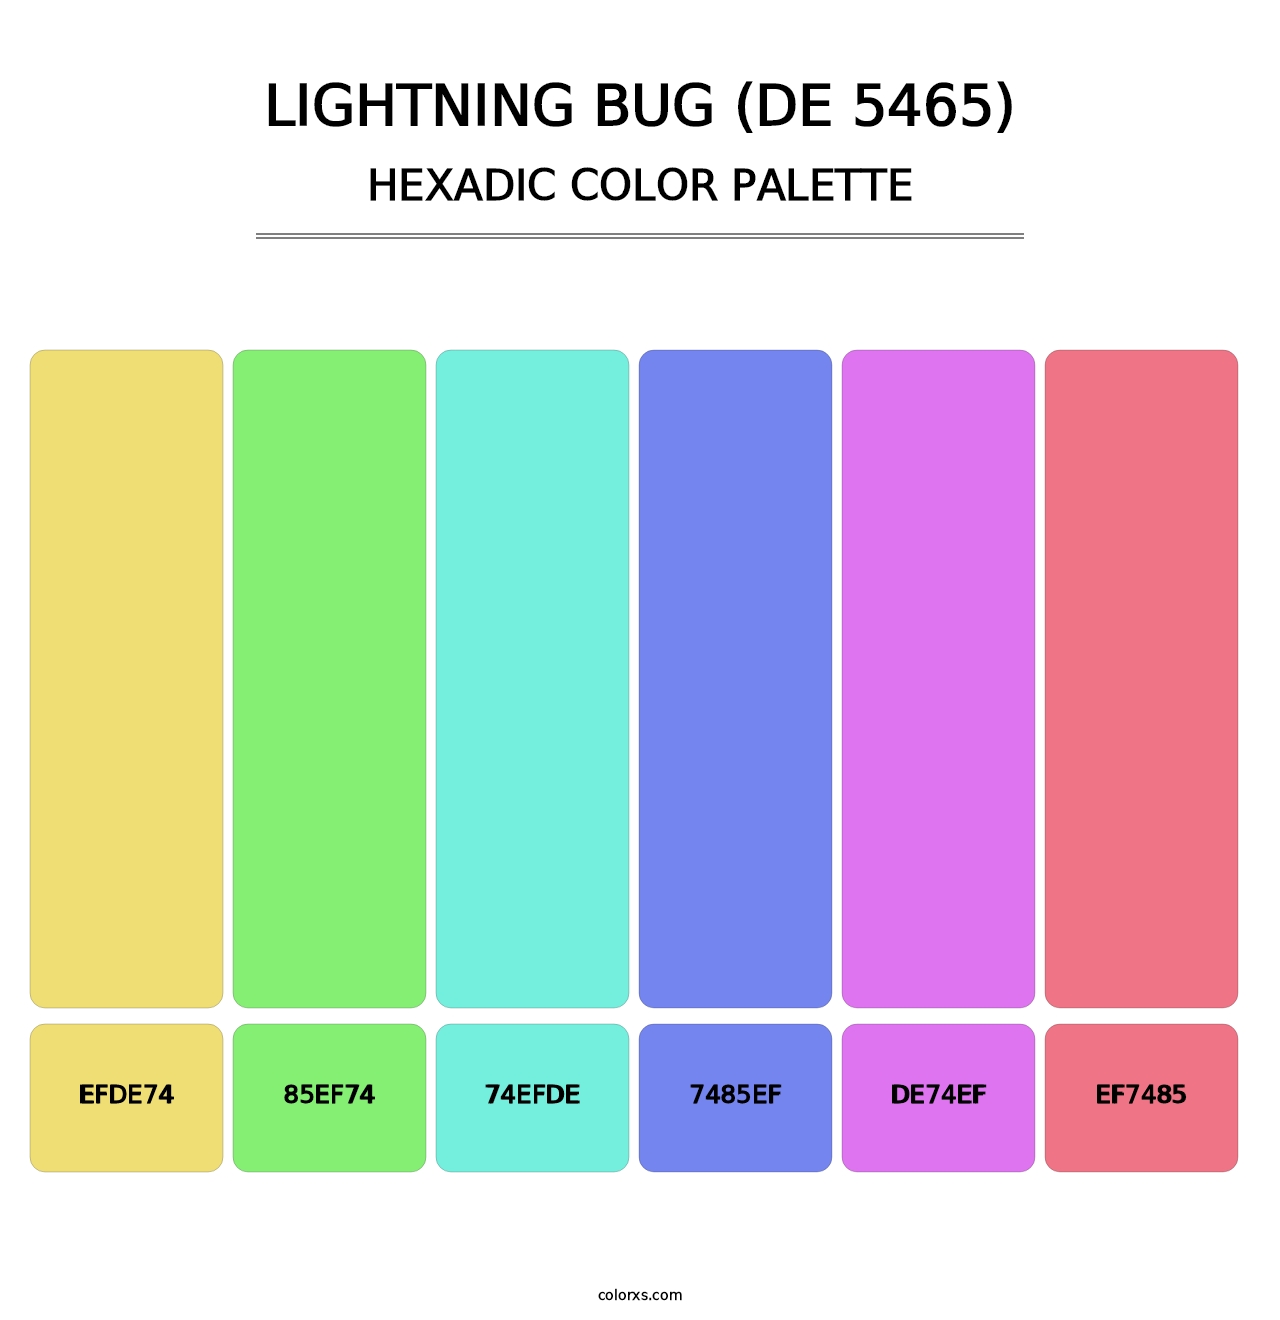 Lightning Bug (DE 5465) - Hexadic Color Palette